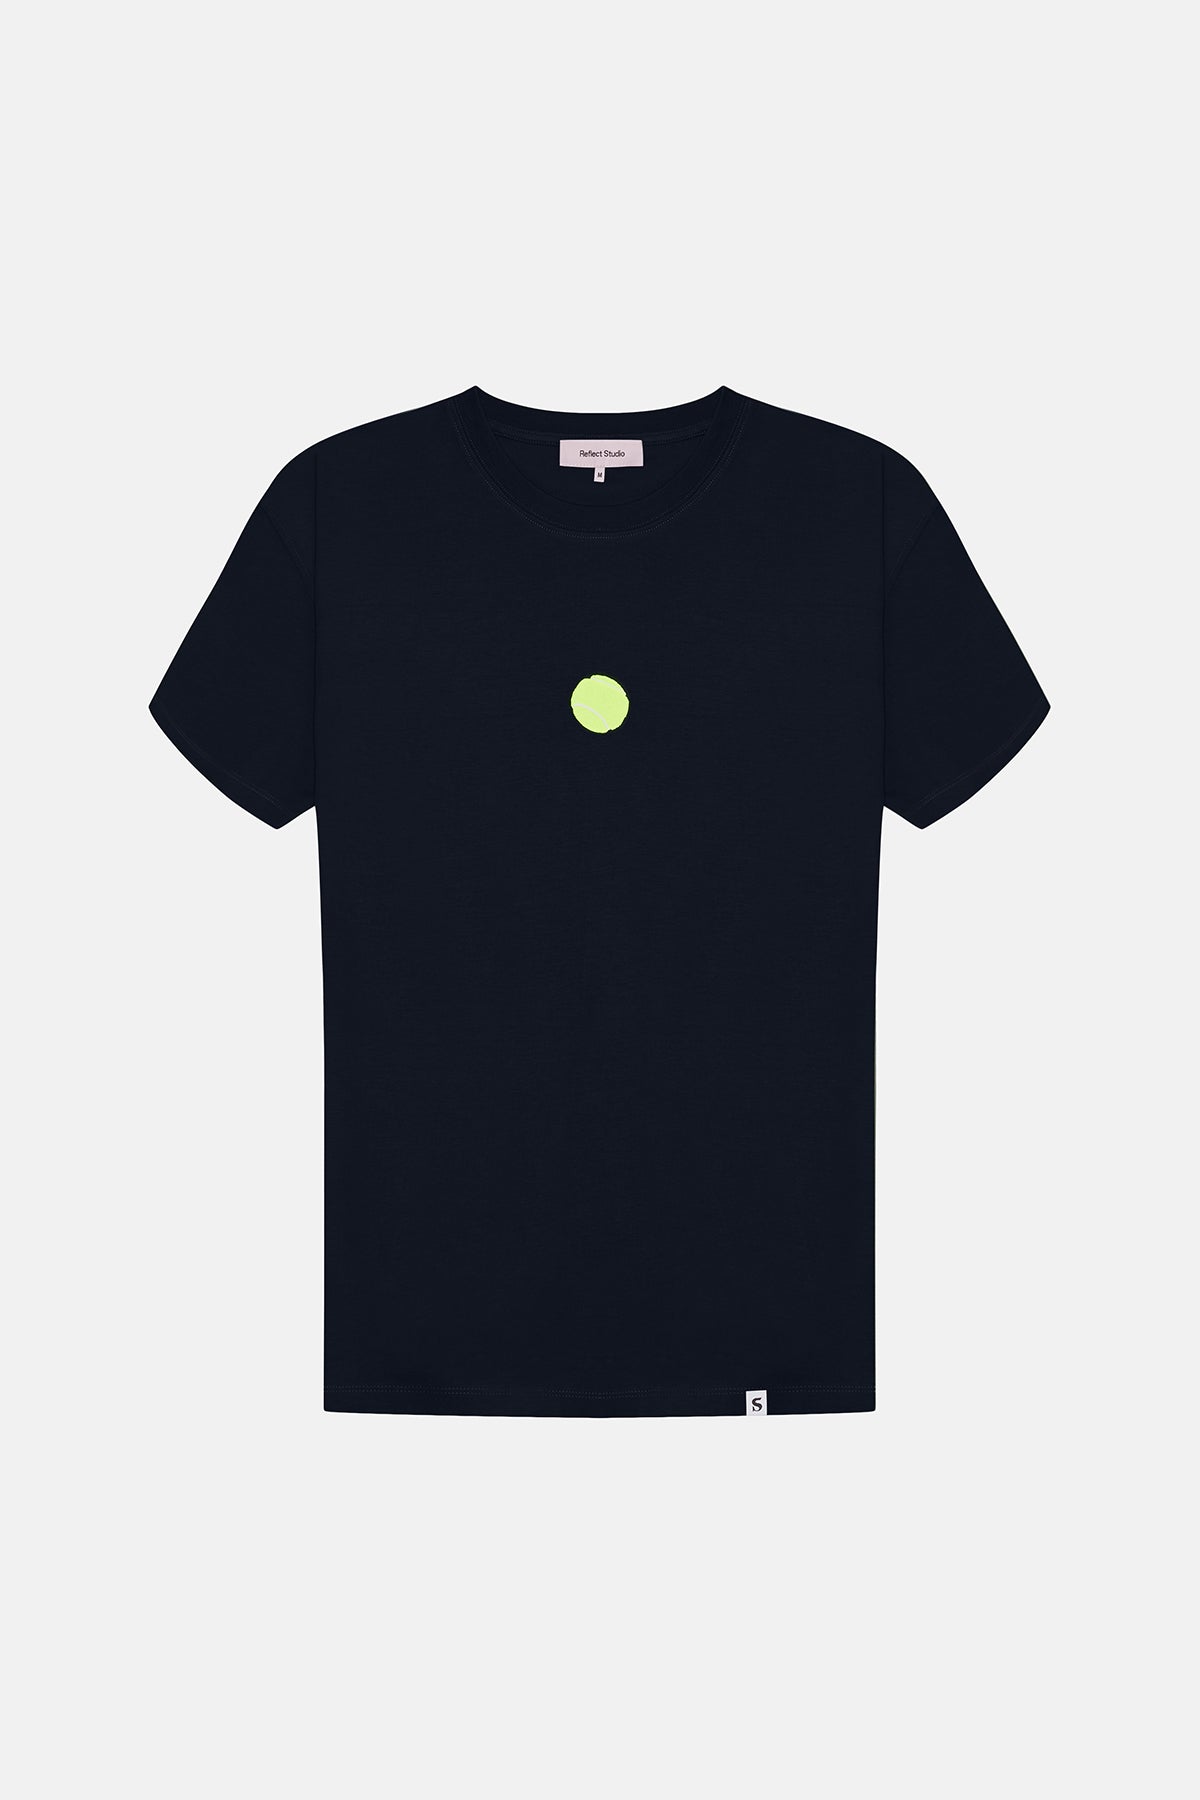 Tennis Ball Supreme T-Shirt - Lacivert